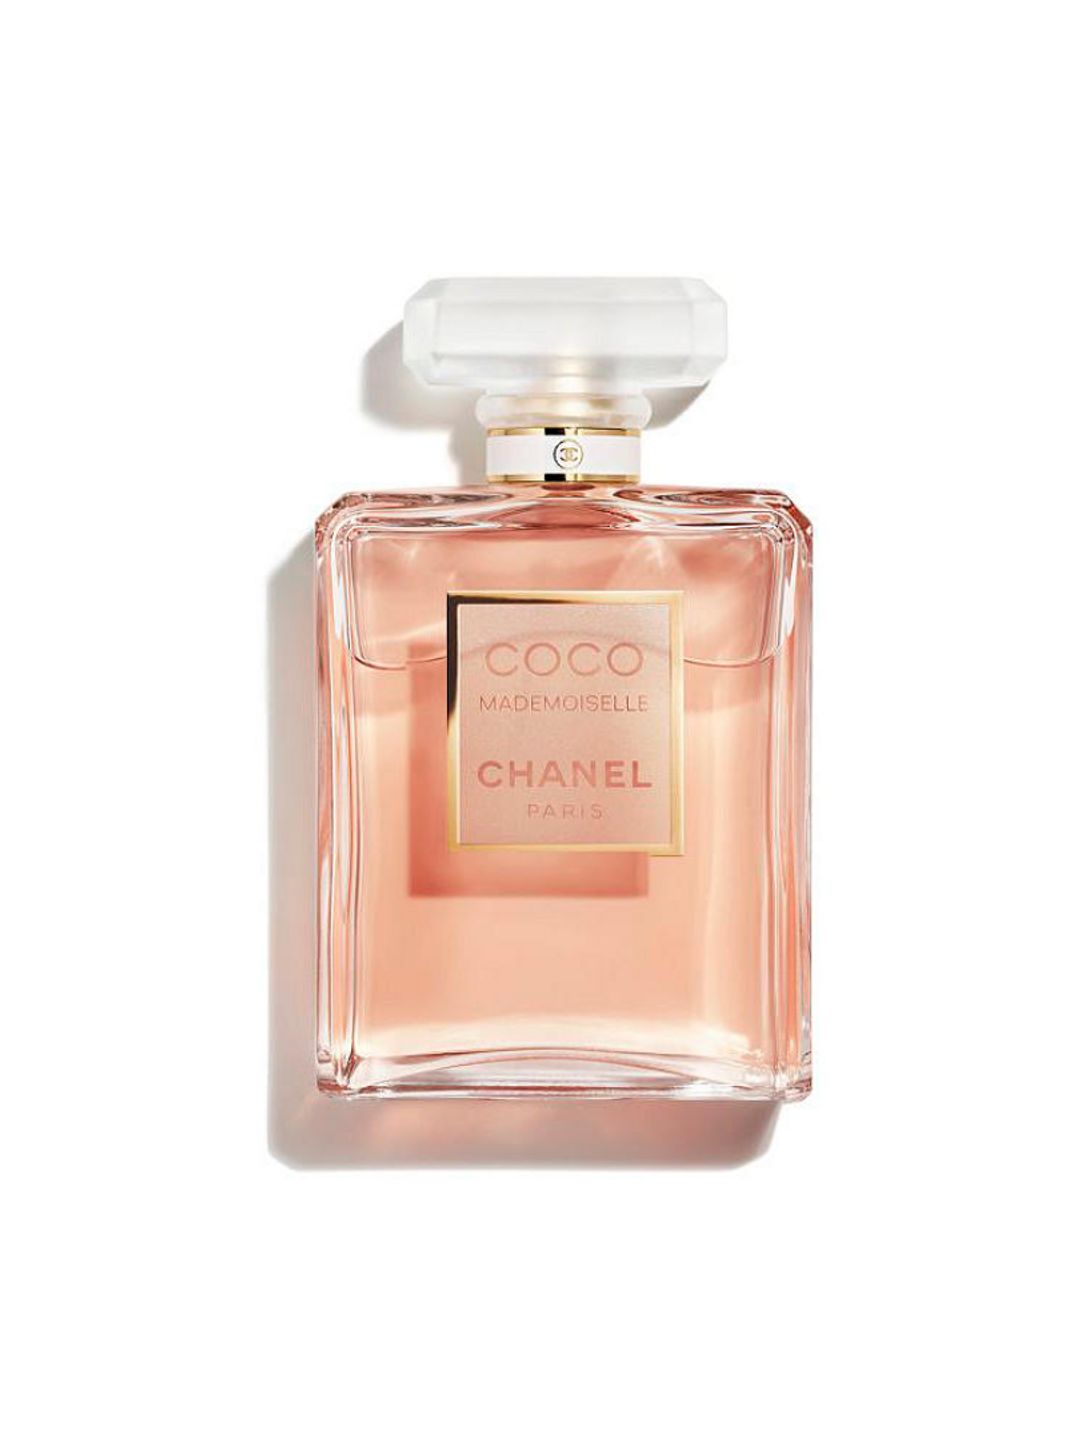 Coco Mademoiselle Eau De Parfum 50ml - Chanel